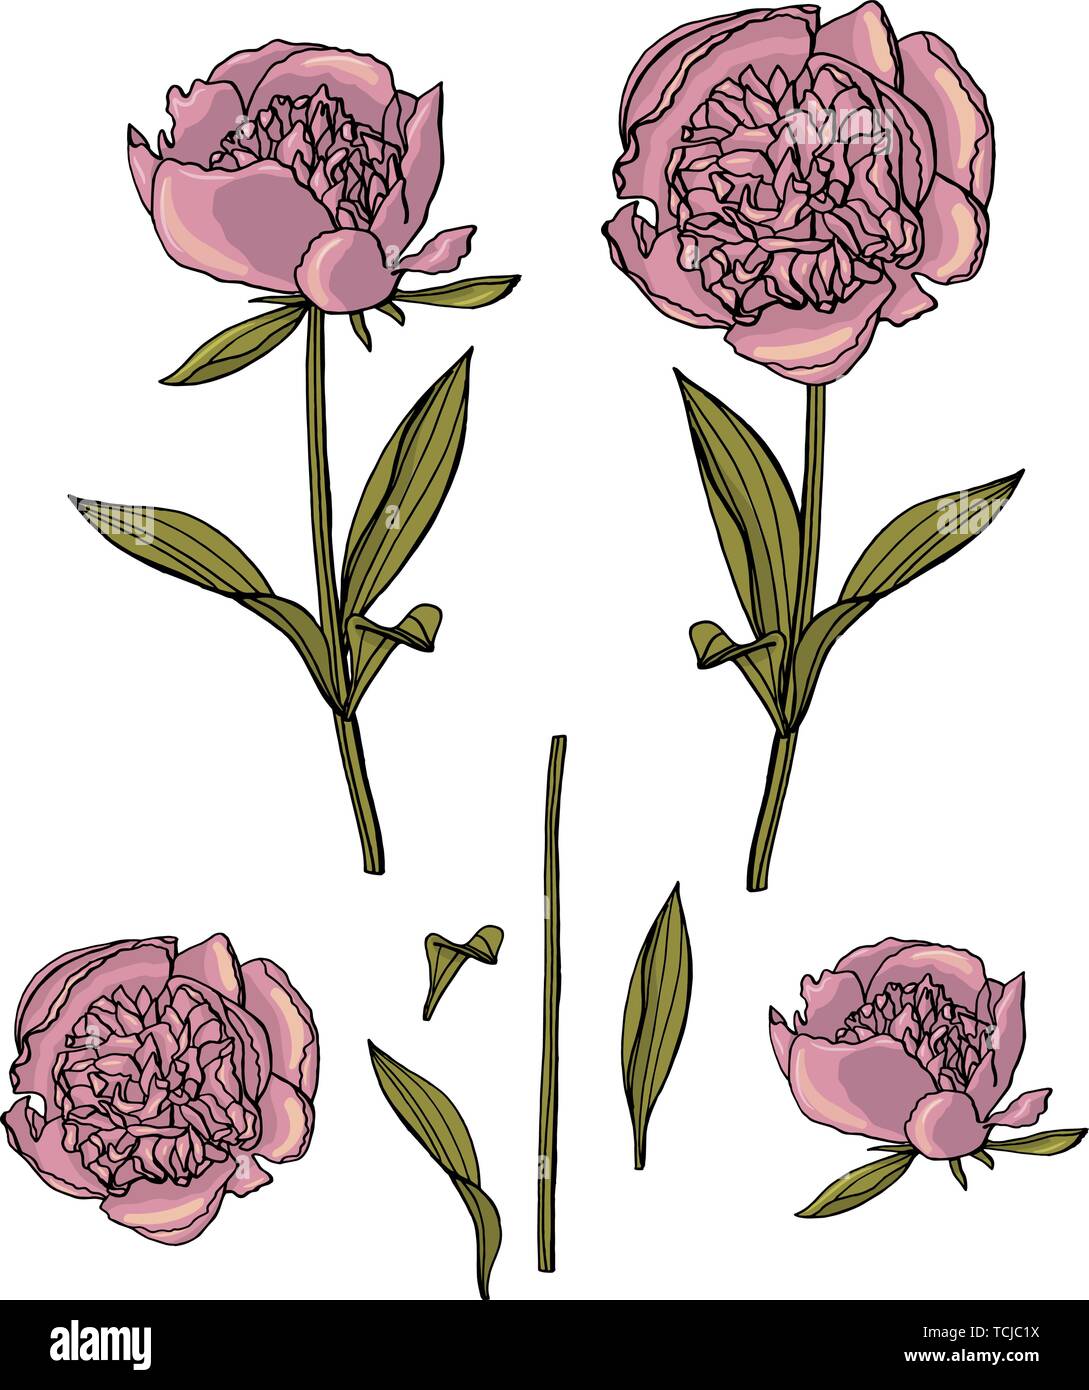 Dibujadas a mano peonía. diseño floral elemento aislado sobre fondo blanco.  stock ilustración vectorial Imagen Vector de stock - Alamy